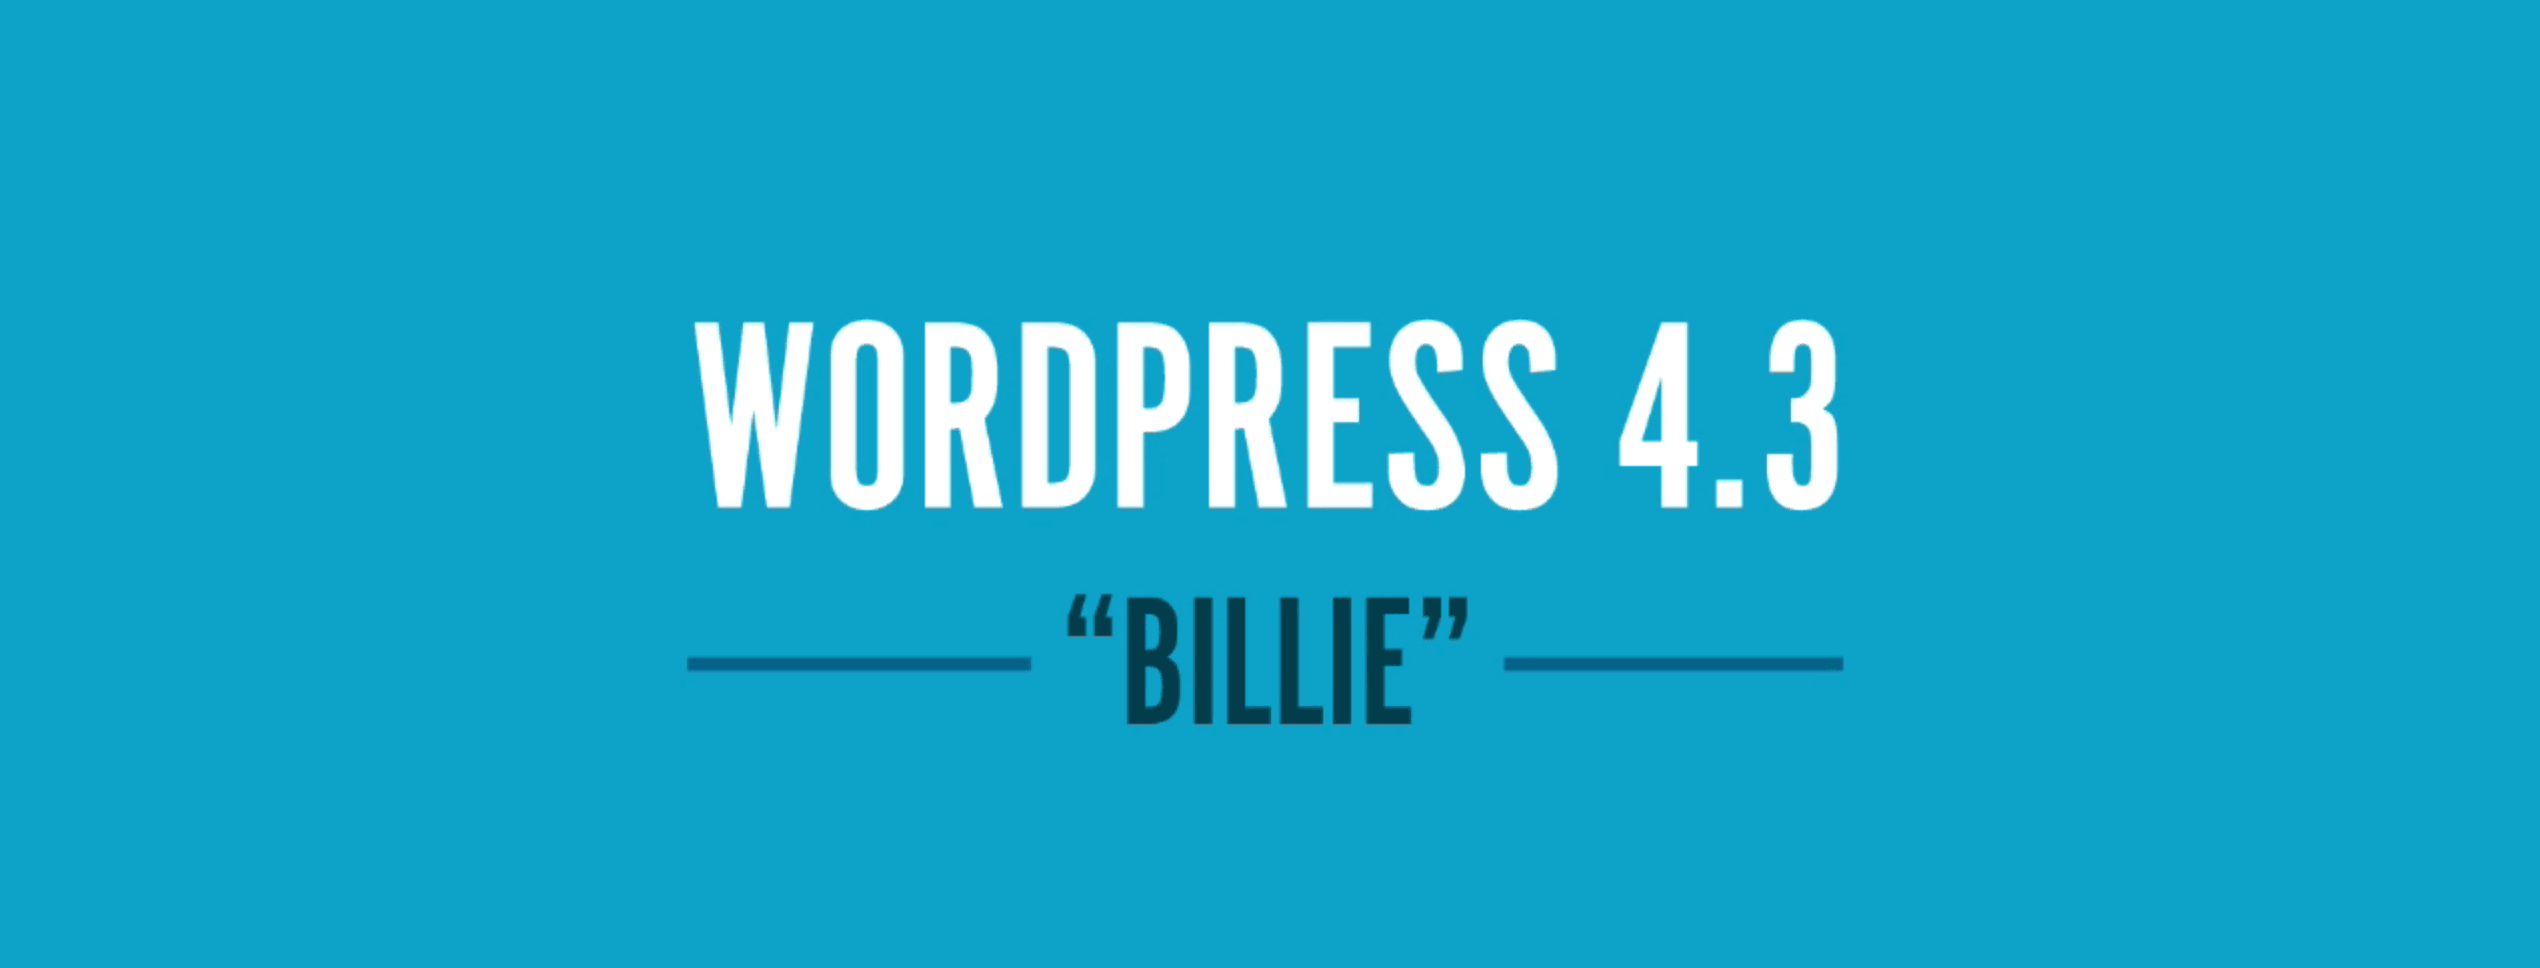 WordPress 4.3 – Billie